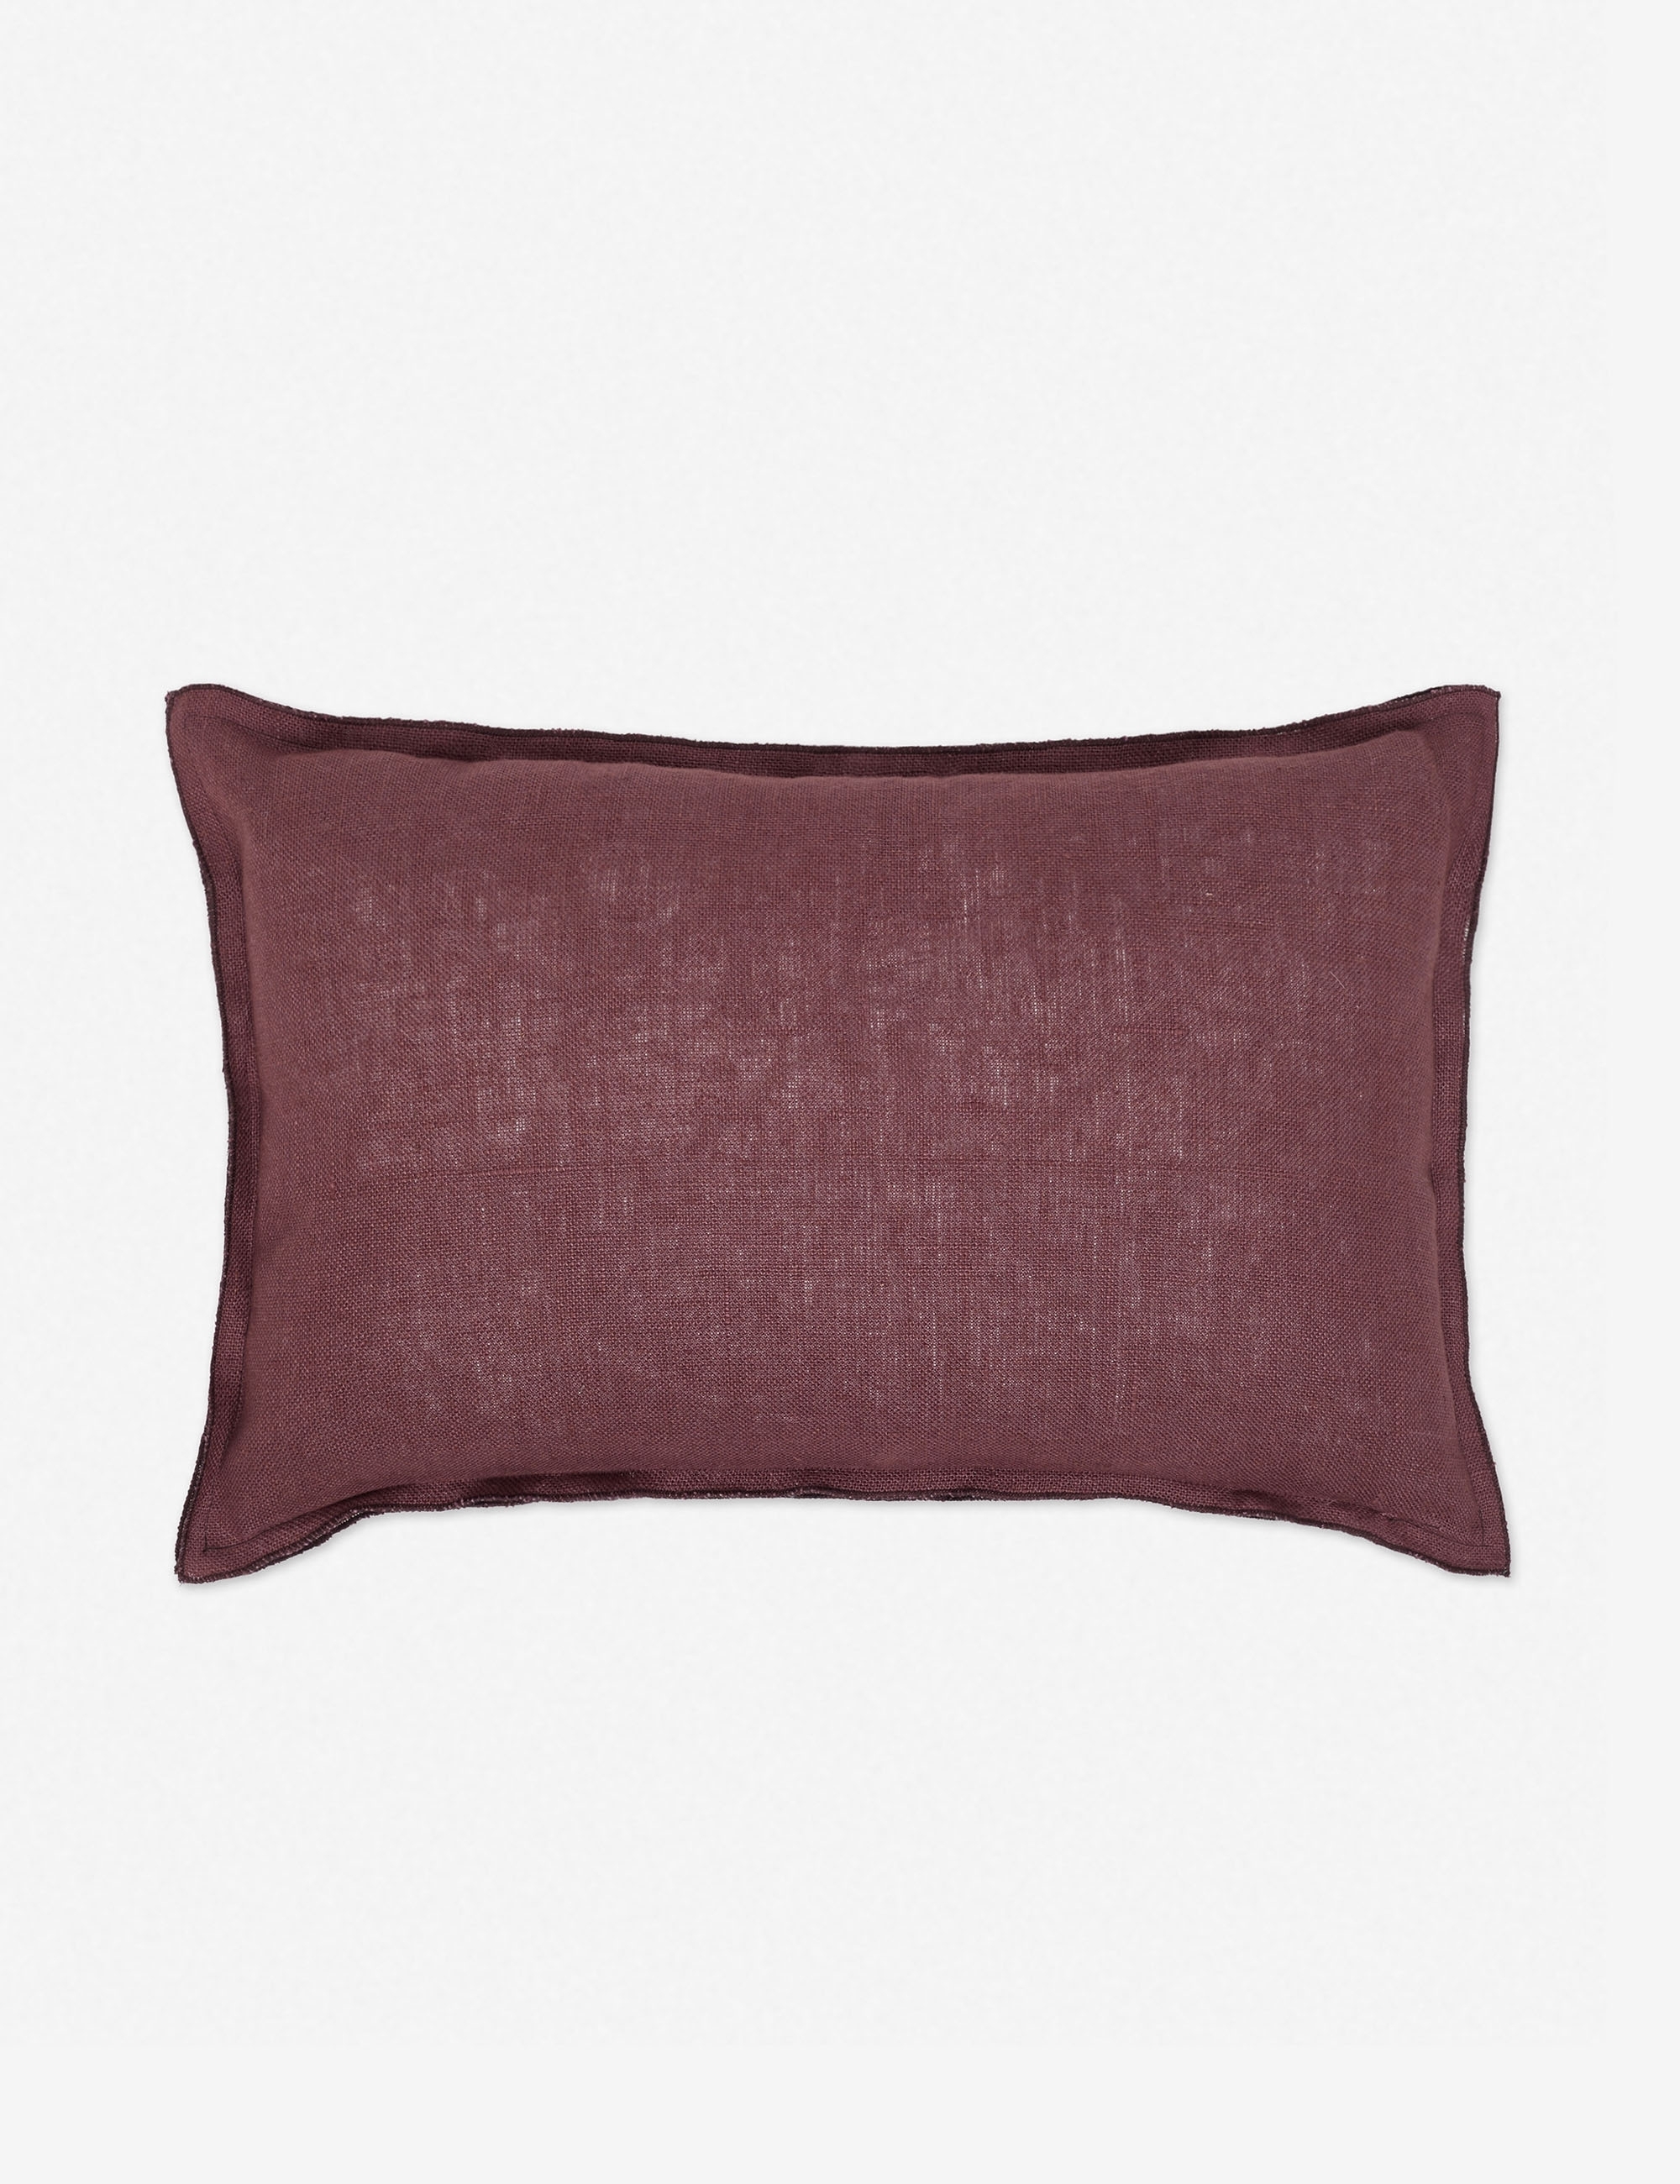 Arlo Linen Lumbar Pillow, Aubergine - Image 2